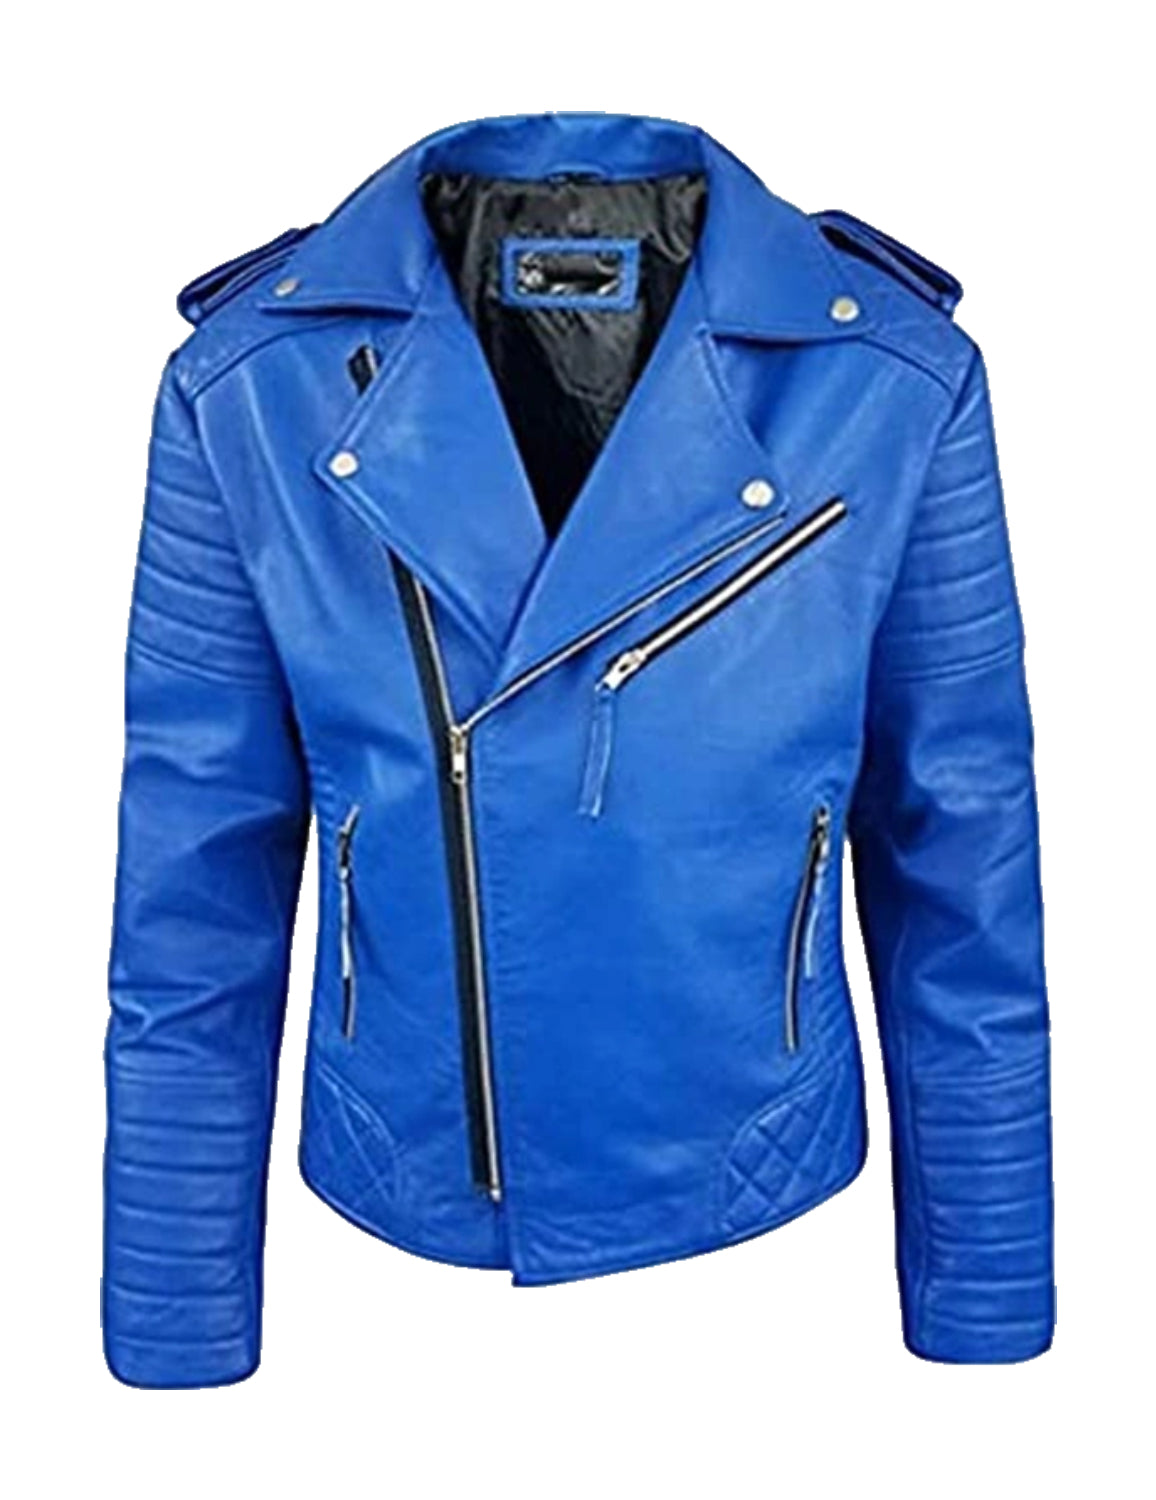 Mens Slimfit Motorcycle Blue Leather Jacket